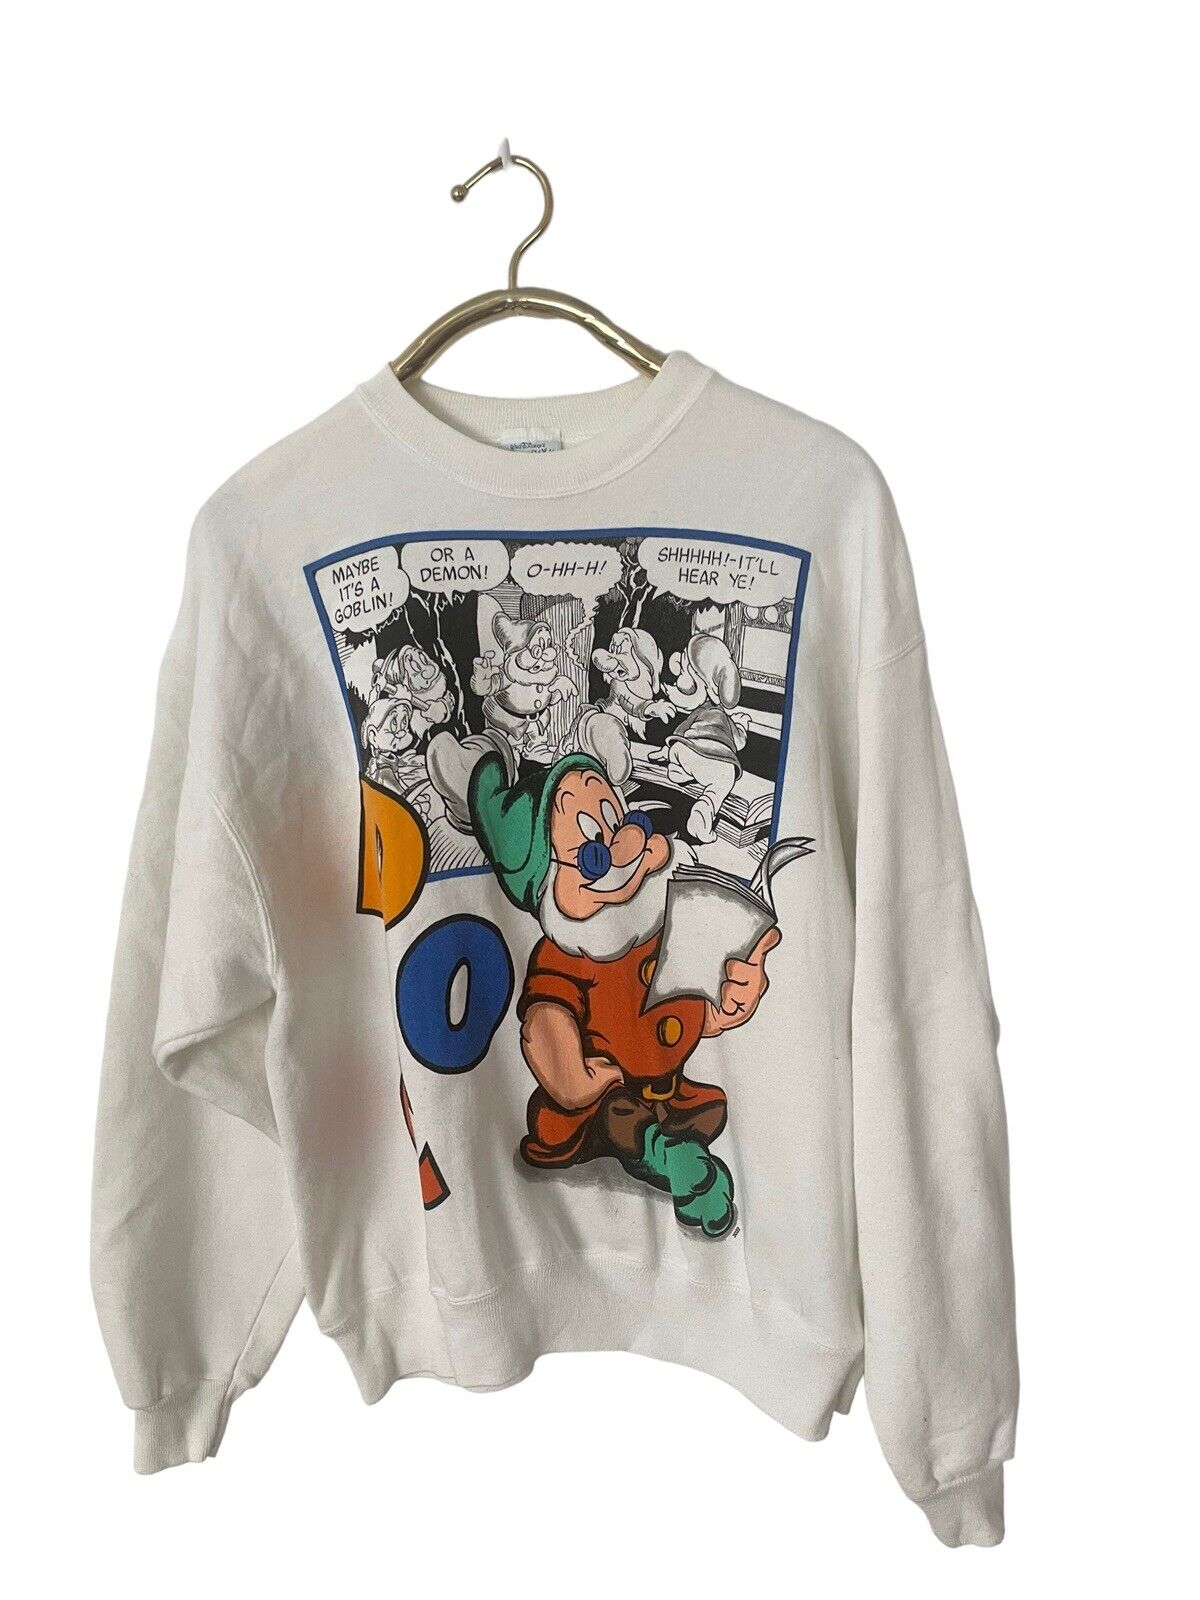 VTG 80s Snow White & seven Dwarfs Doc Sweatshirt one size fits all